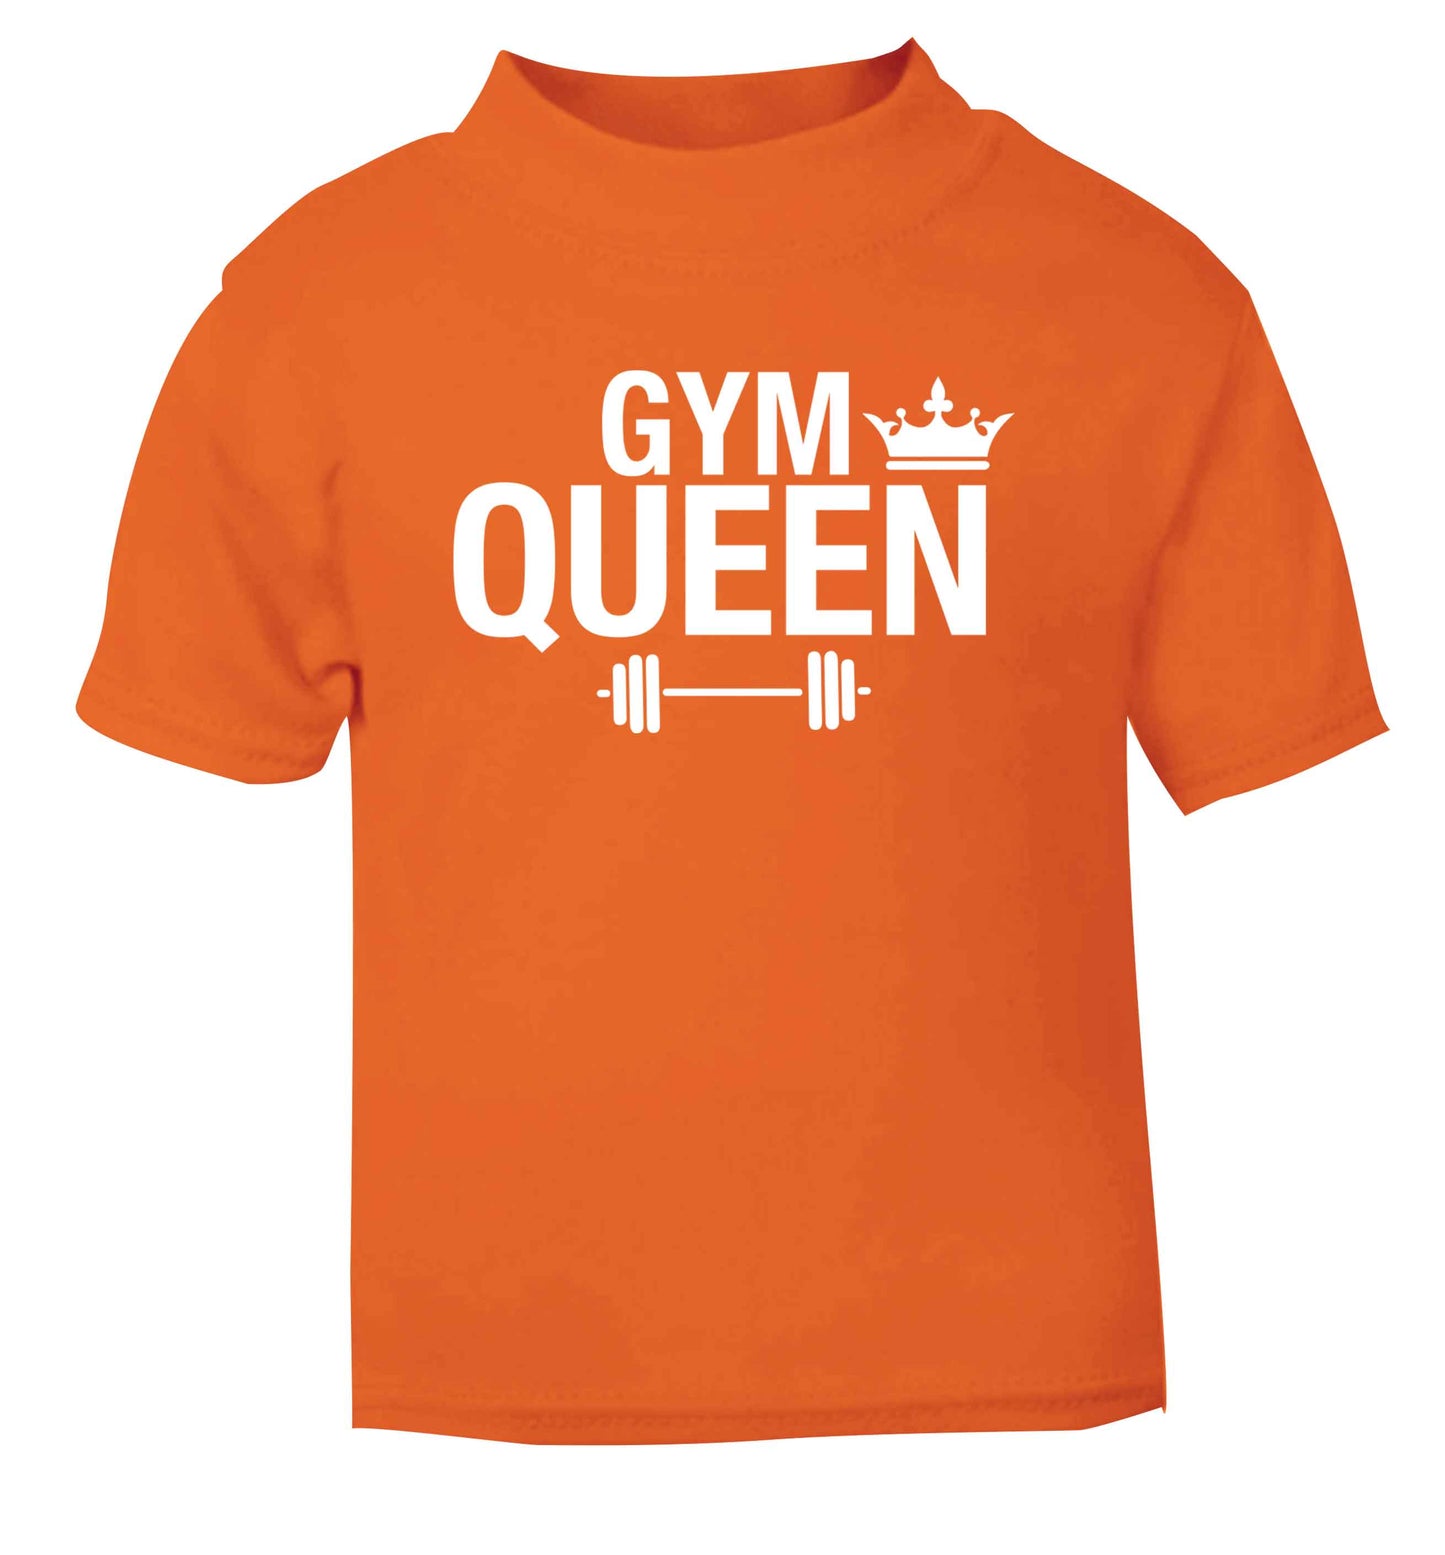 Gym queen orange Baby Toddler Tshirt 2 Years